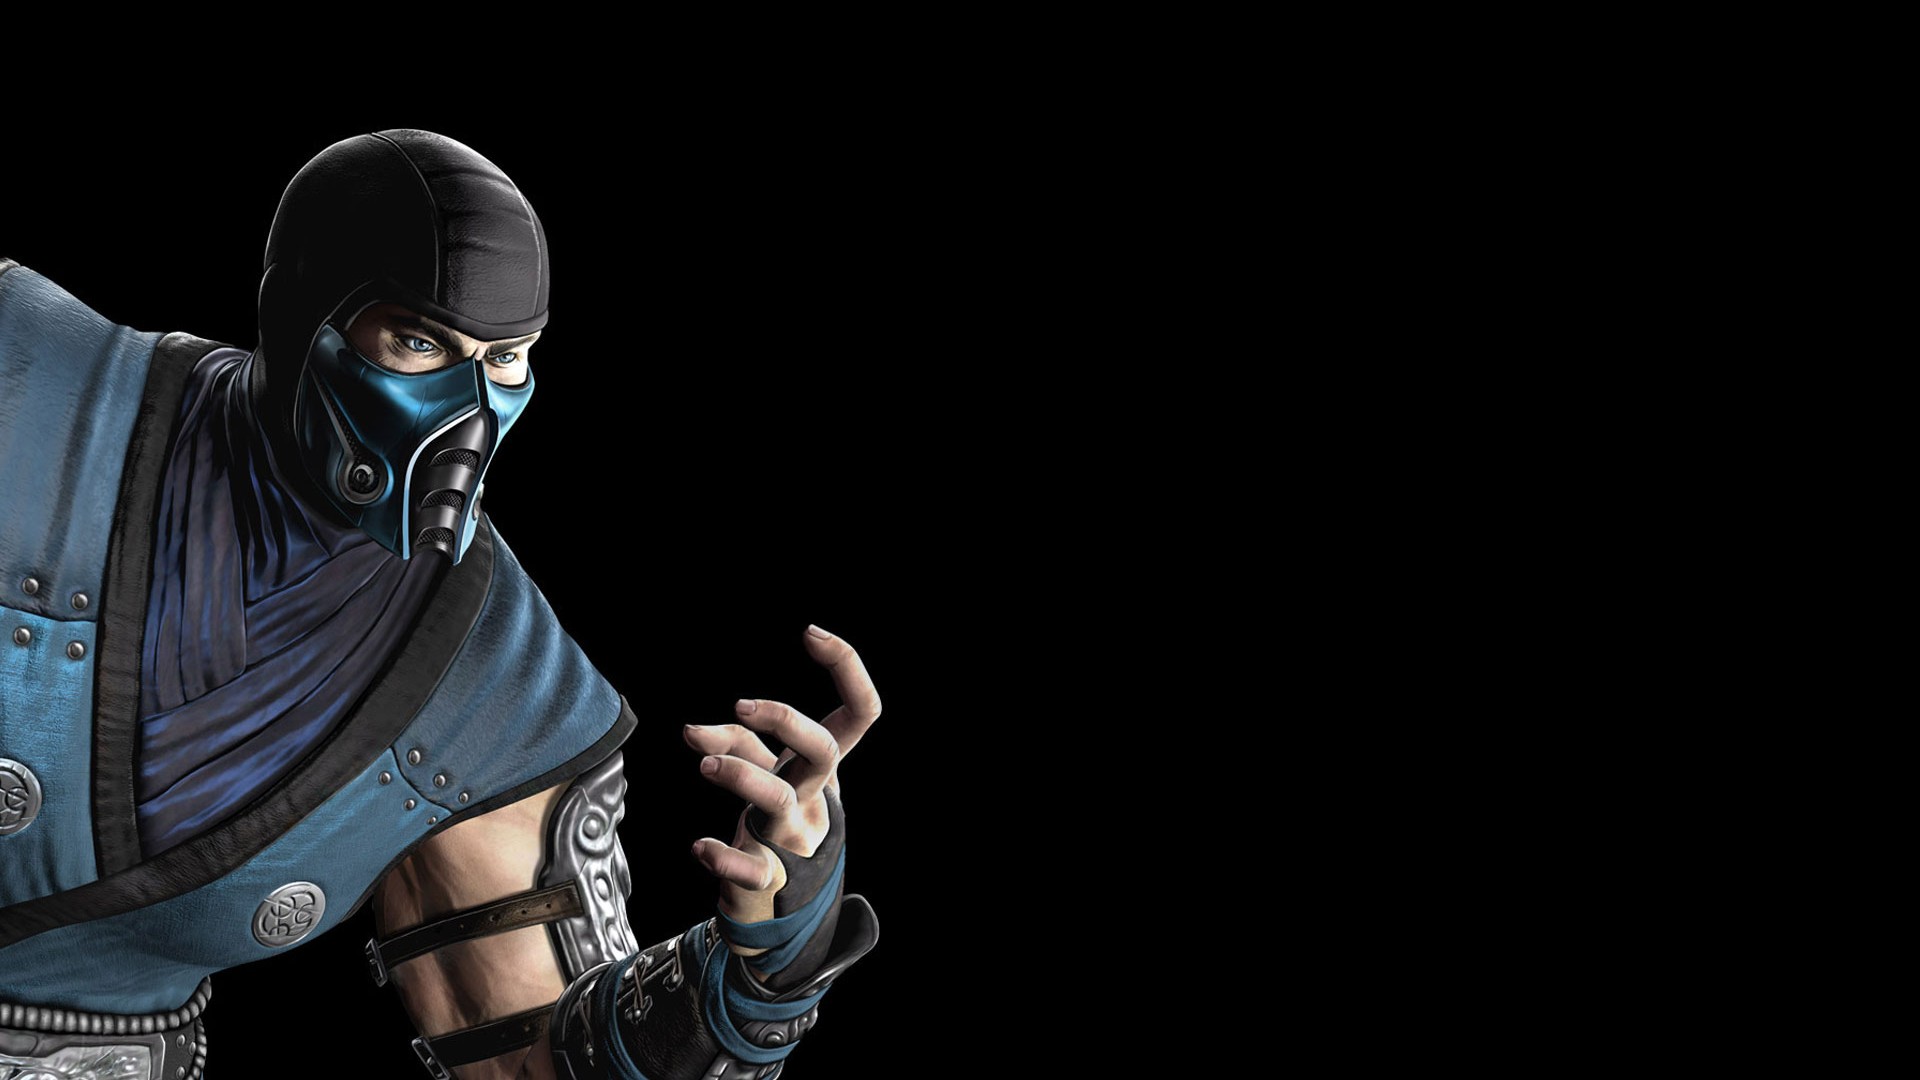 Descarga gratis la imagen Mortal Kombat, Videojuego, Sub Zero (Mortal Kombat) en el escritorio de tu PC